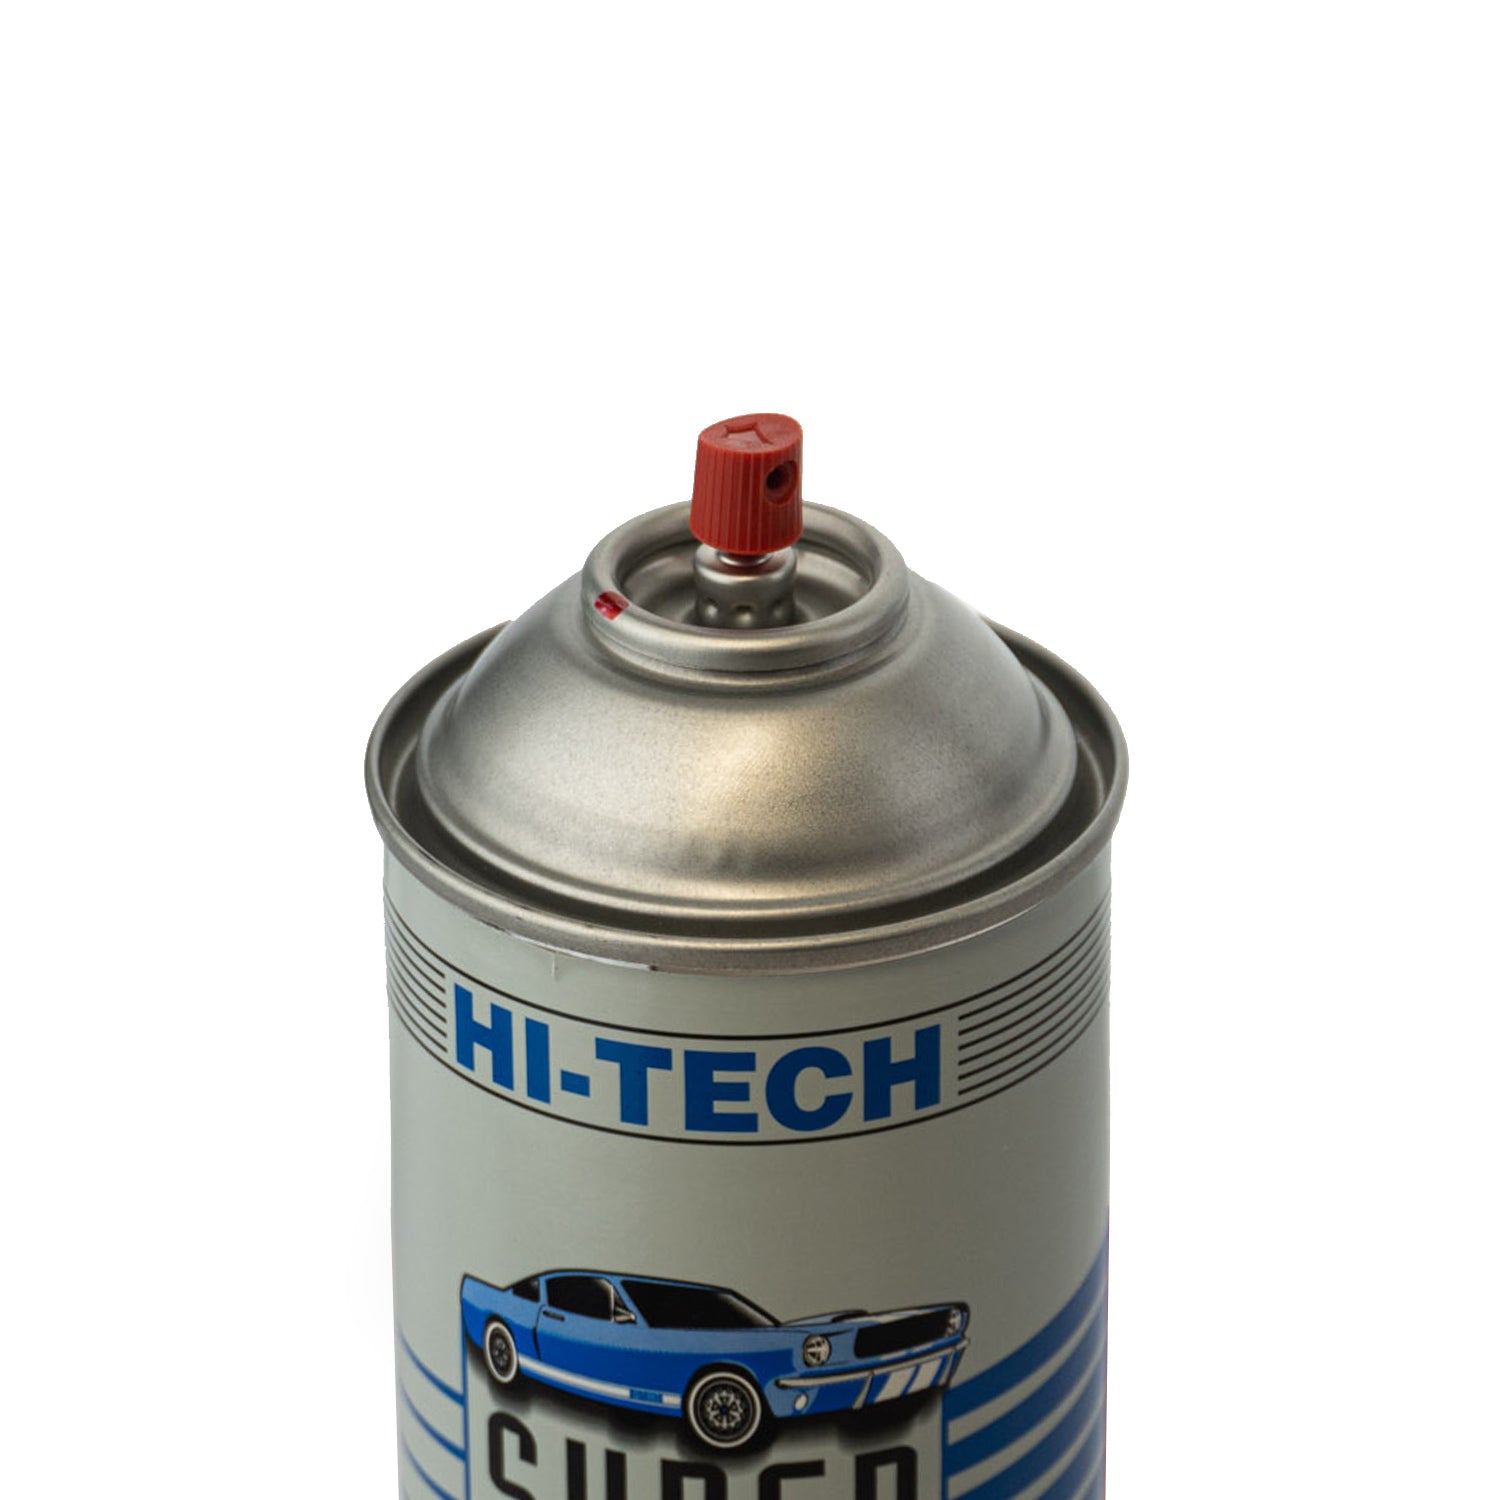 Hi-tech-super-solvent-spray-can